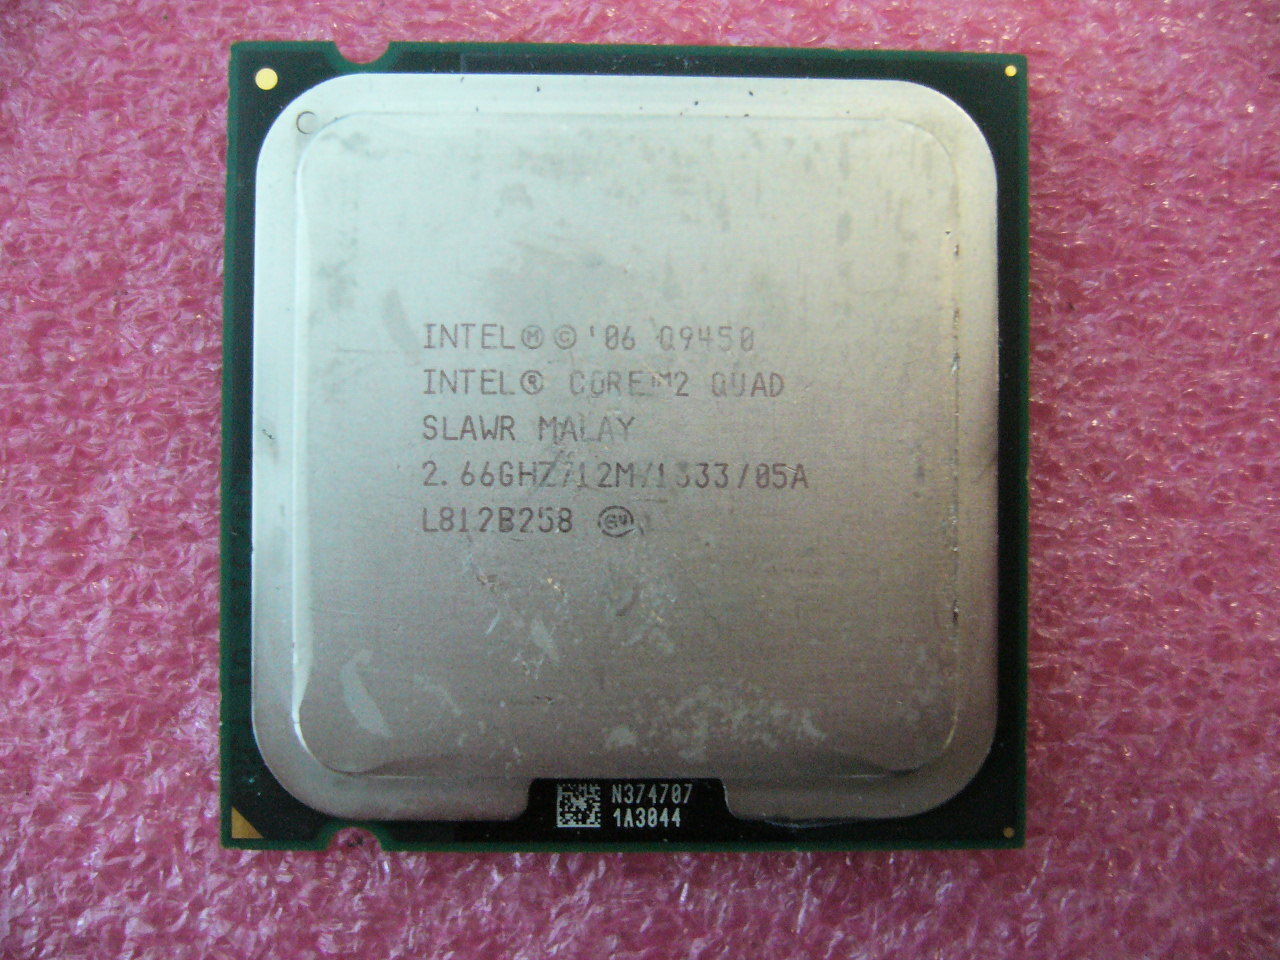 QTY 1x INTEL Quad Cores Q9450 CPU 2.66GHz/12MB/1333Mhz LGA775 SLAWR